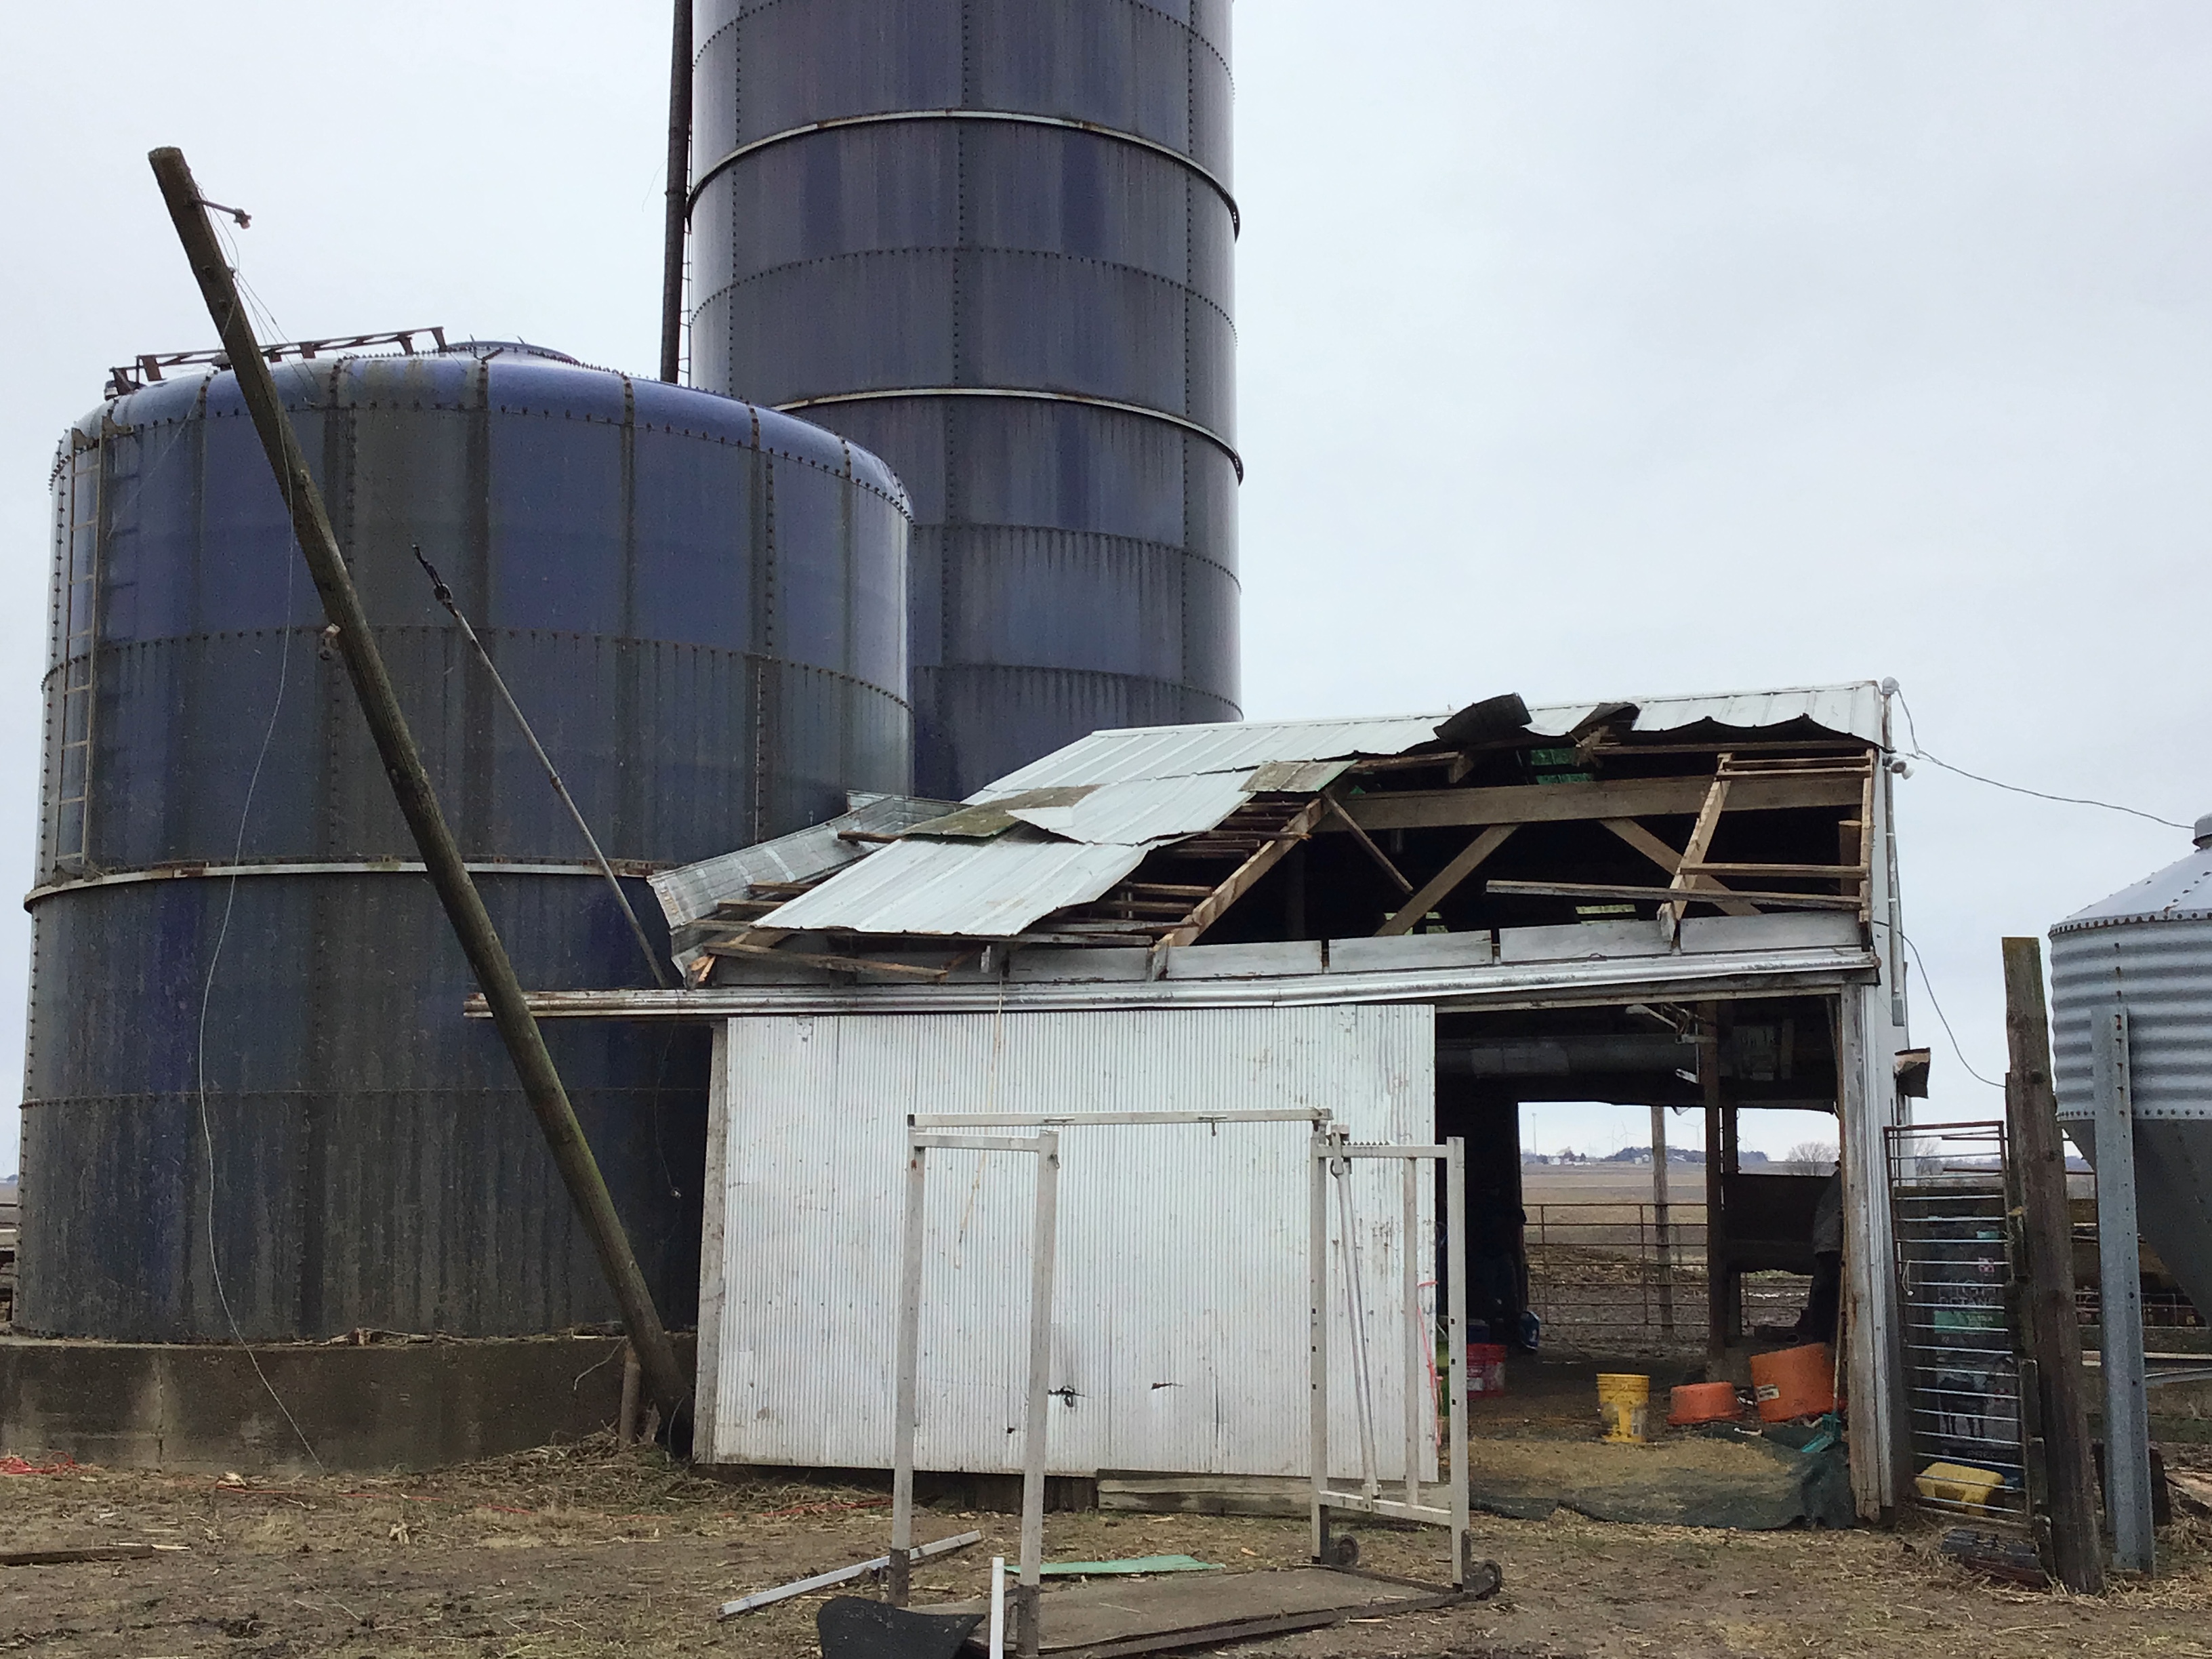 Farm outbuilding damaged